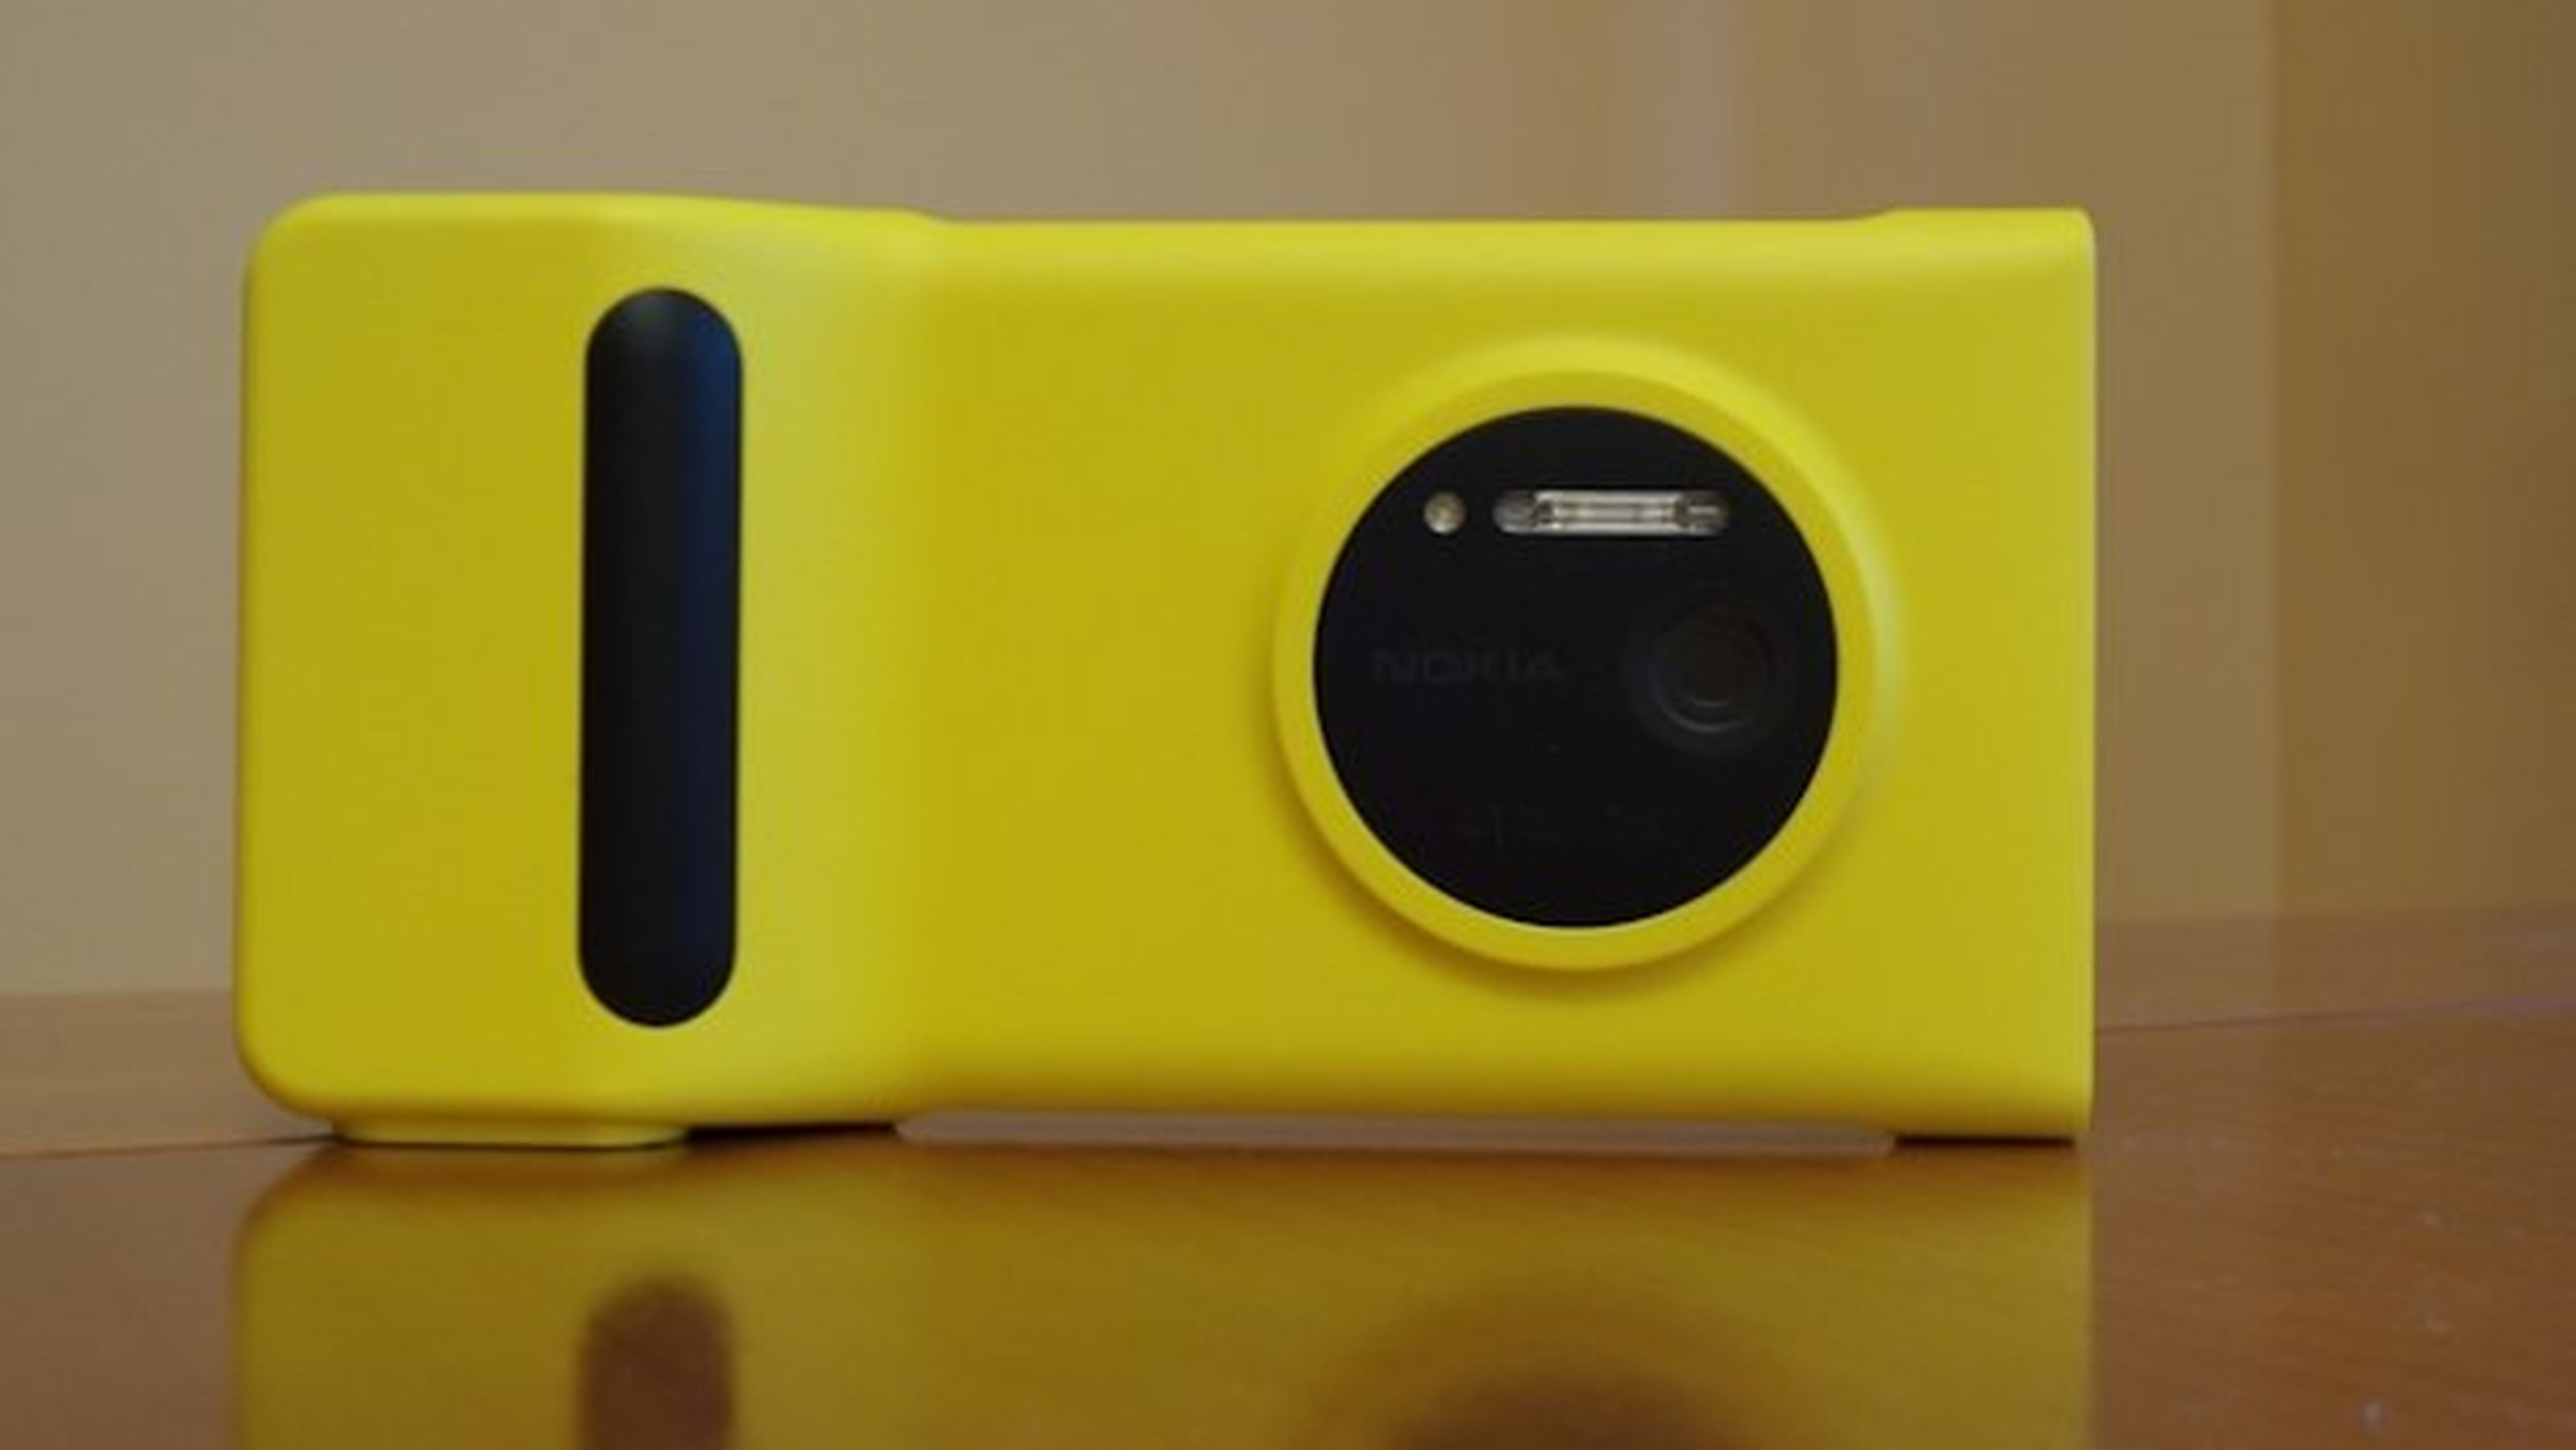 Nokia Lumia 1020. Camera Grip.